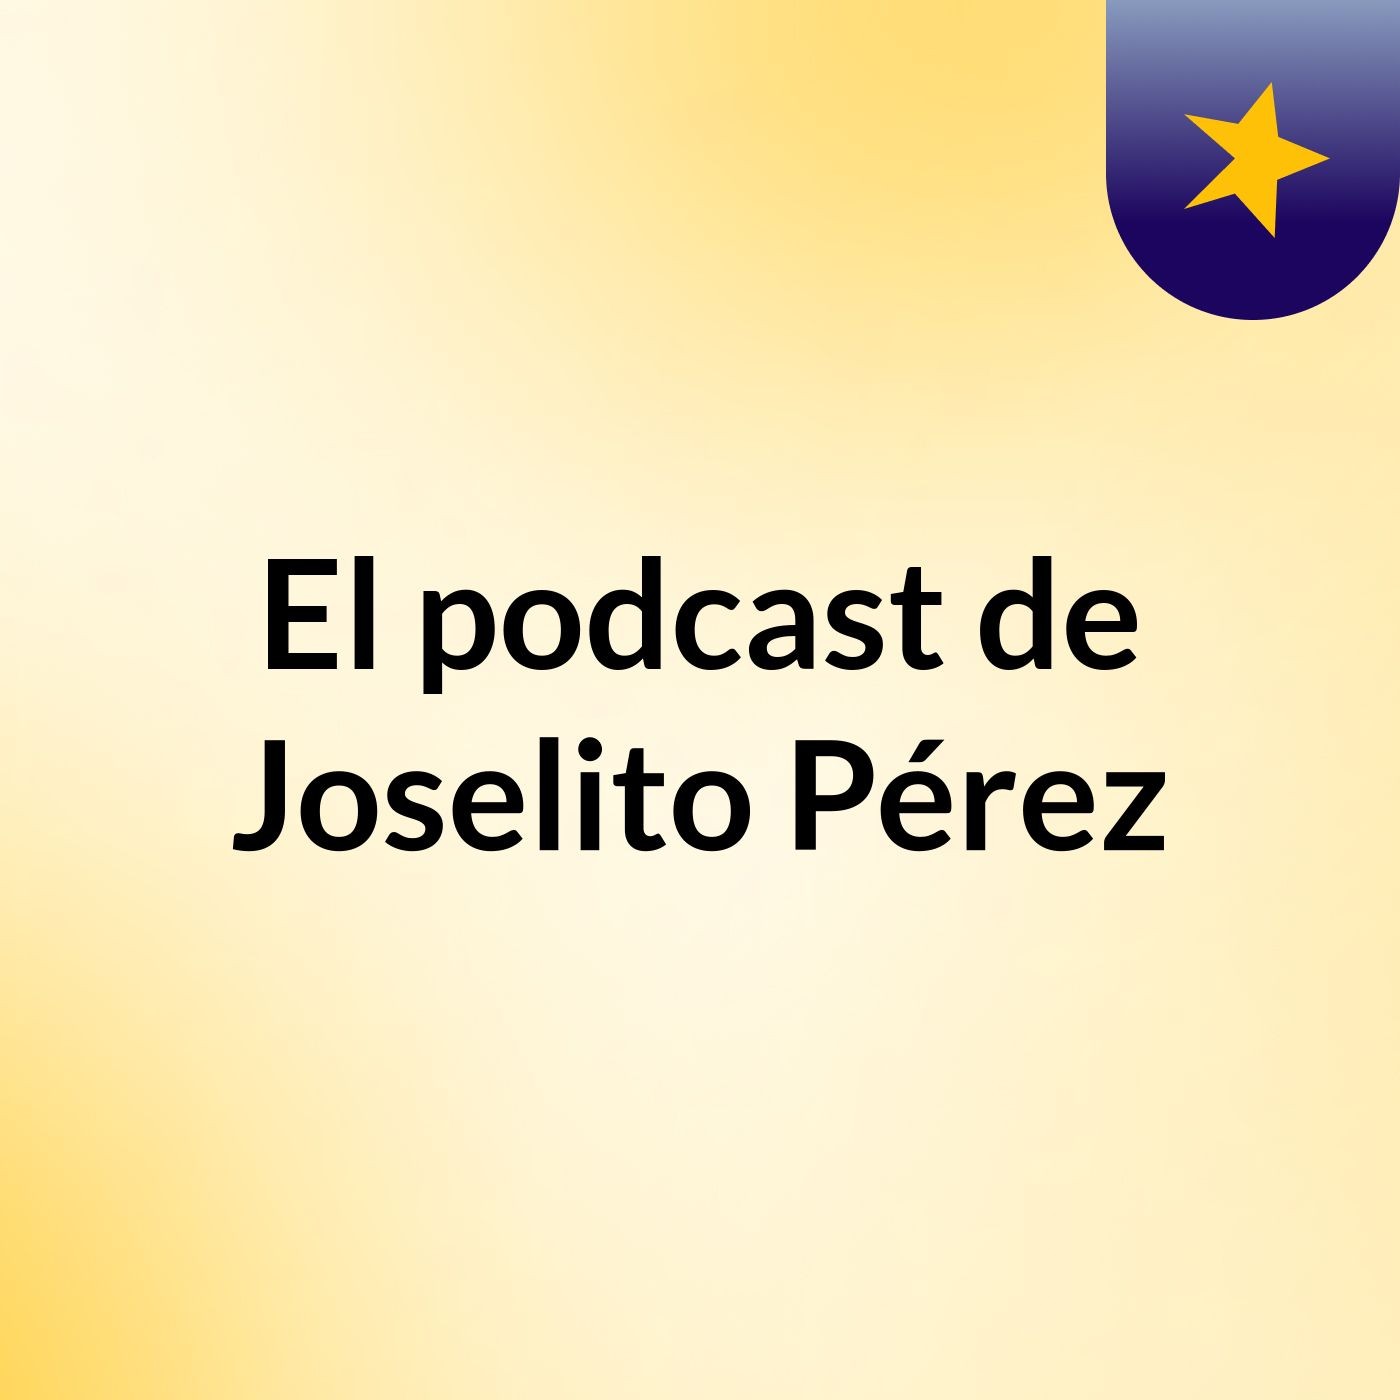 El podcast de Joselito Pérez